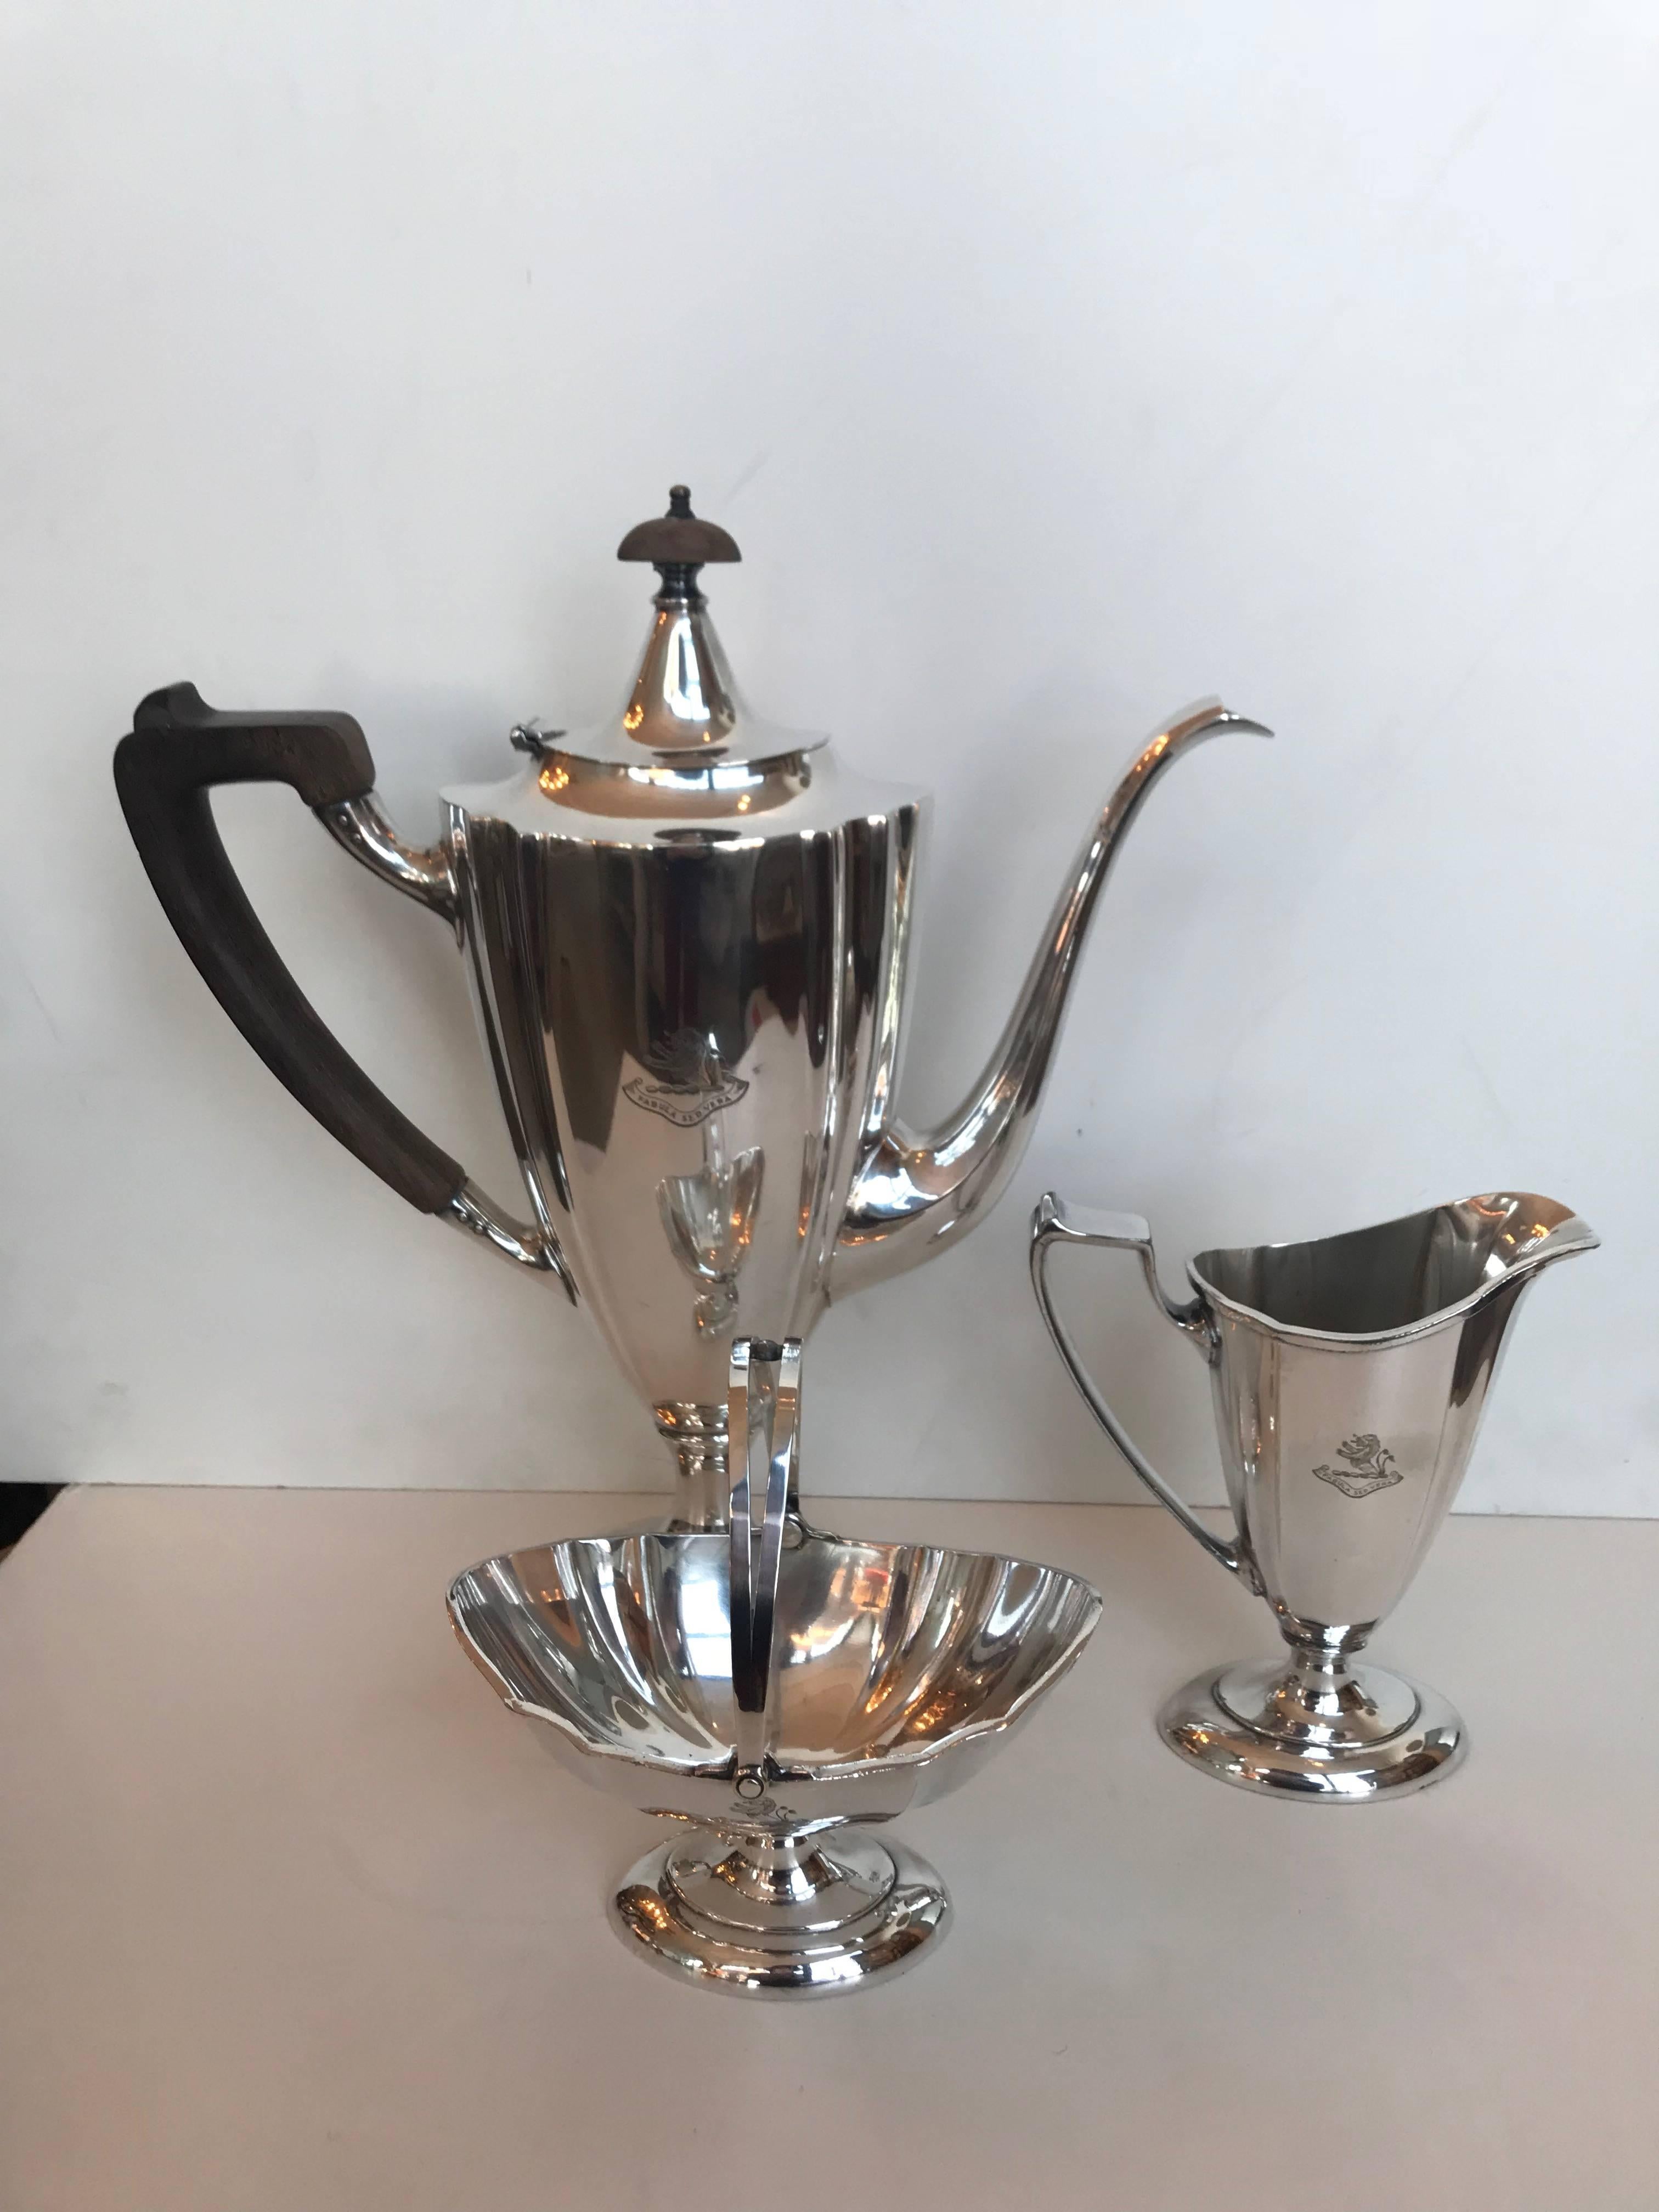 English silver plate tea service
Coffee pot: 10